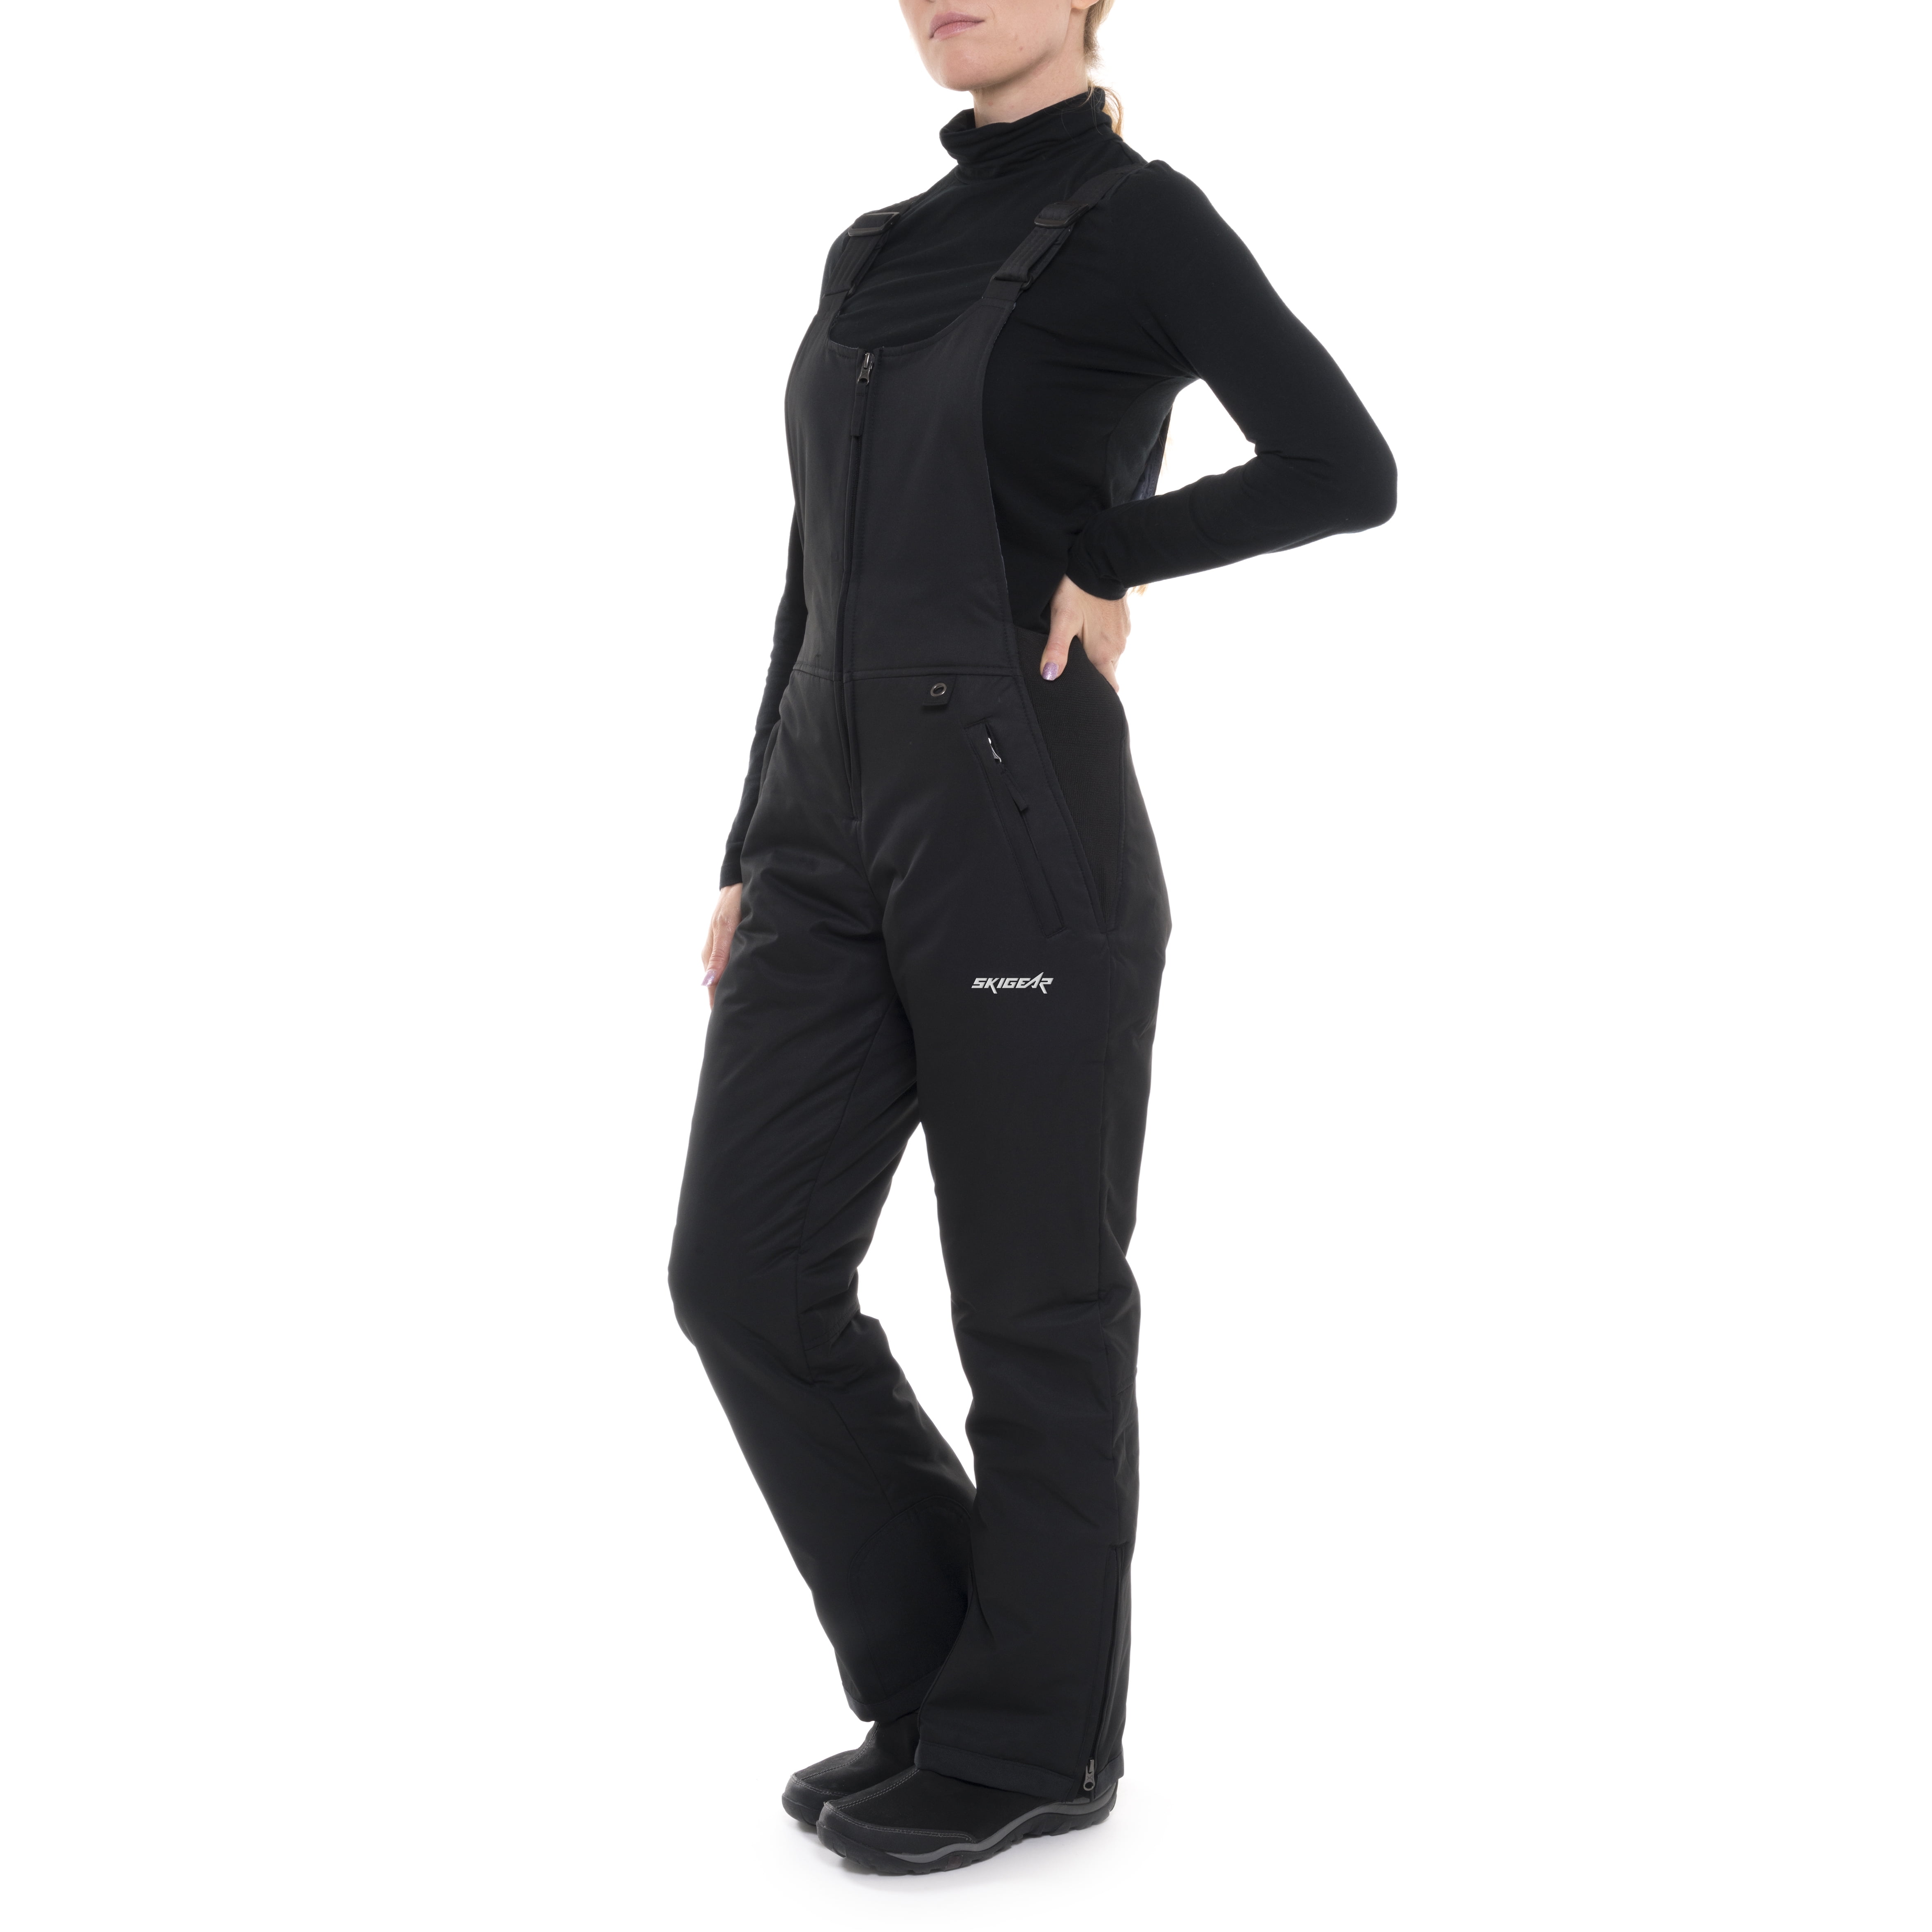 Ski Gear by Arctix Women's Essential Snow Bib Overall Pant, Black, Small 